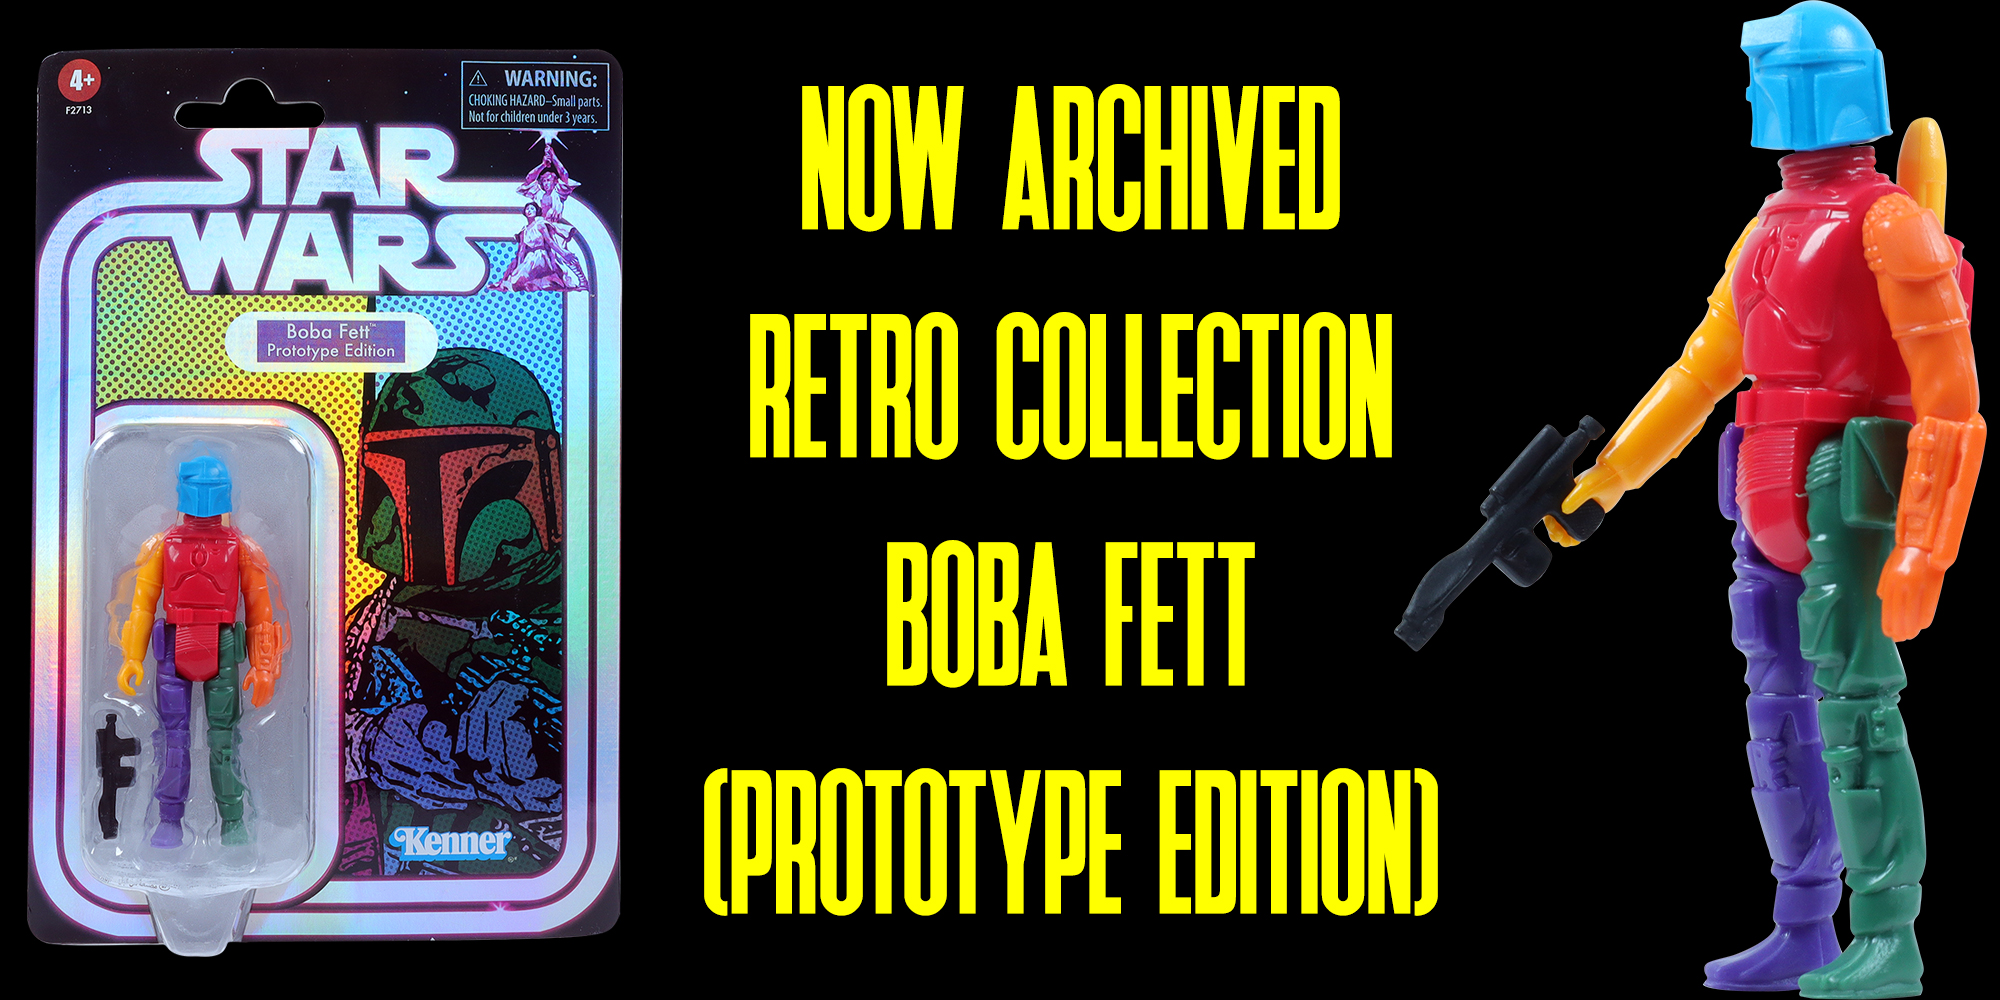 Boba Fett Prototype Edition